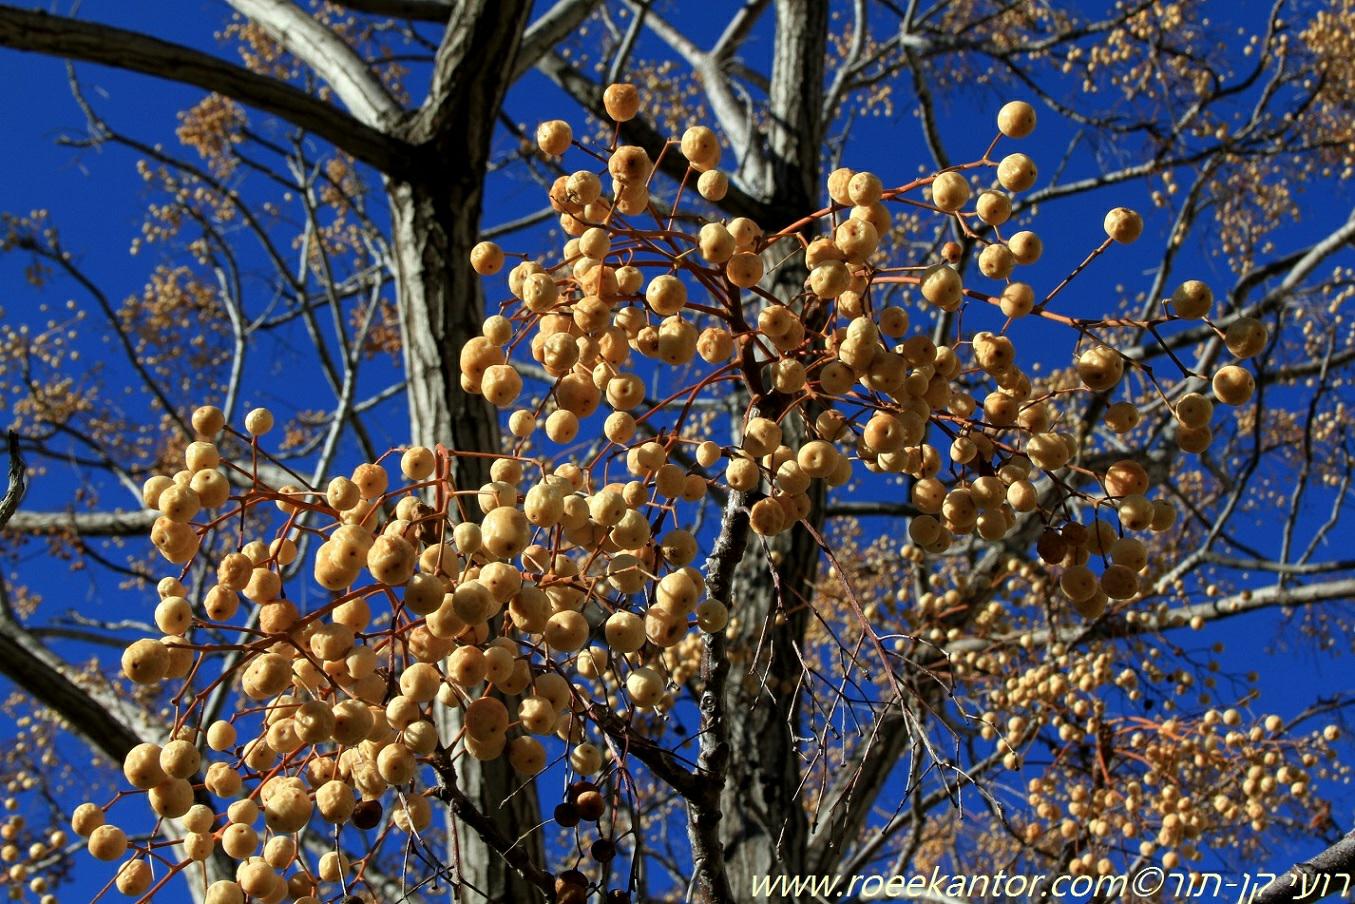 Melia azedarach - Chinaberry Tree, White Cedar, Indian Bead Tree, Cape Lilac, Persian Lilac, אזדרכת מצויה, אזדרכת מצויה